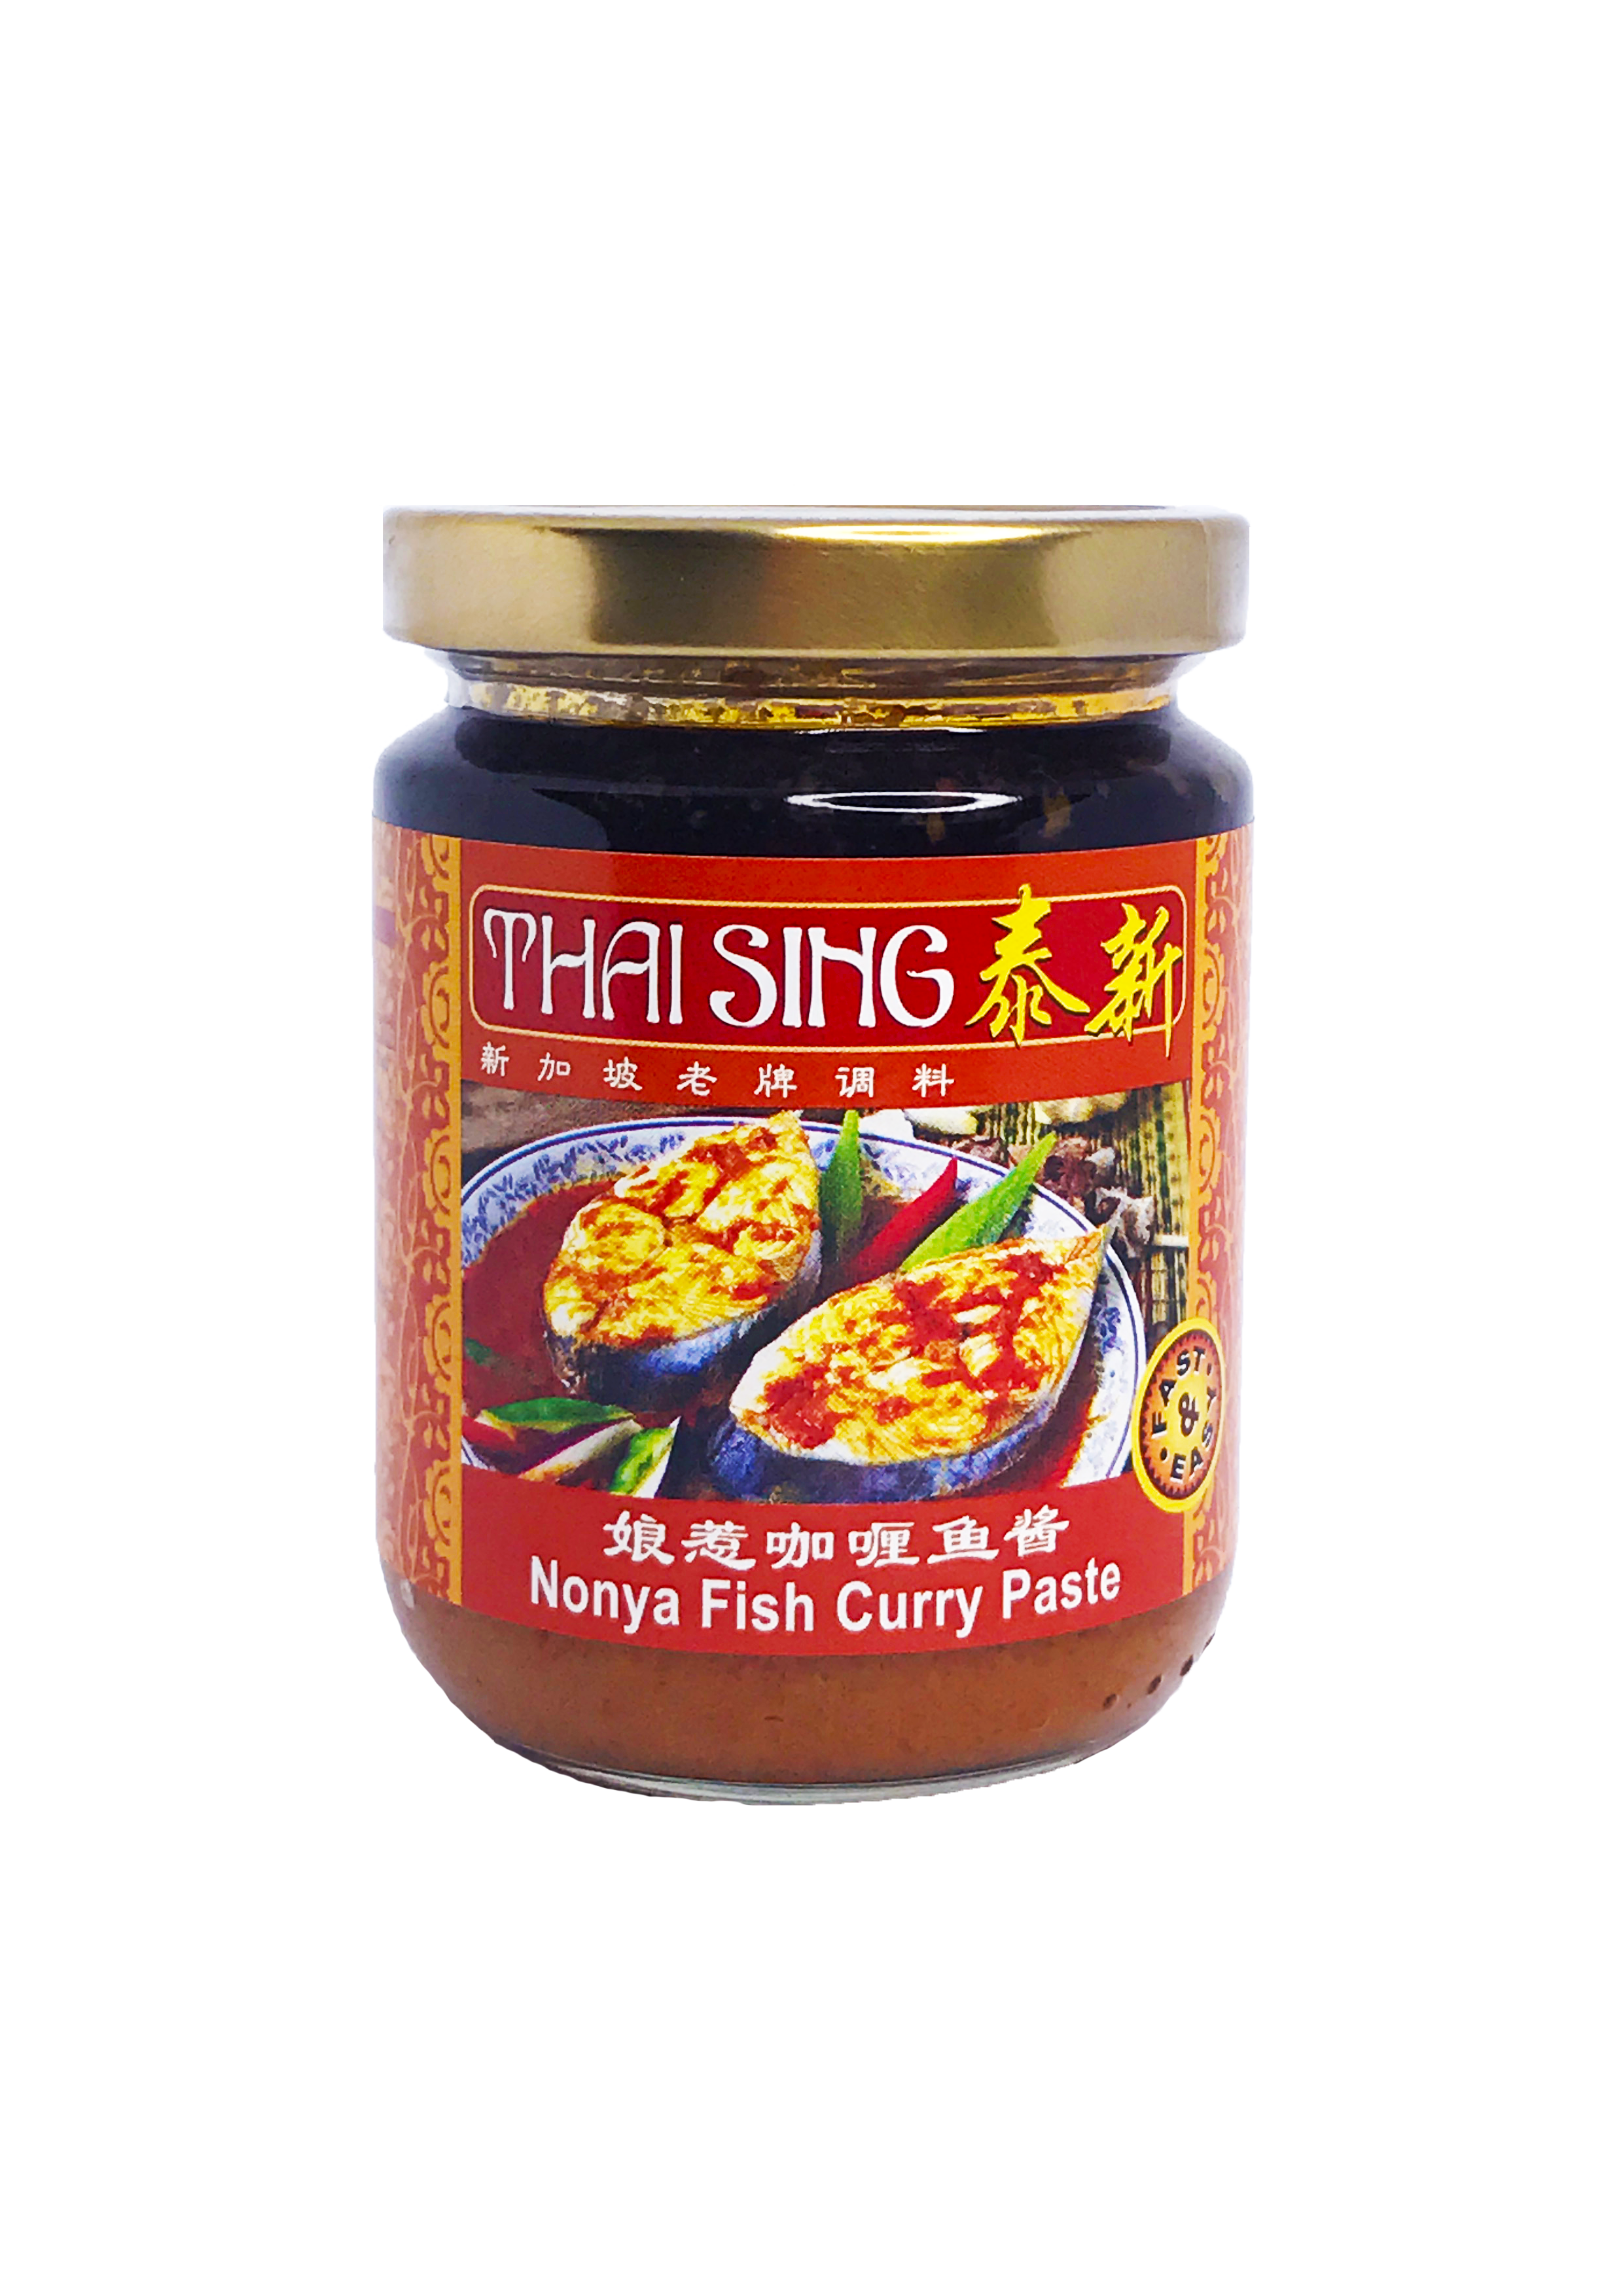 Nonya Fish Curry Paste